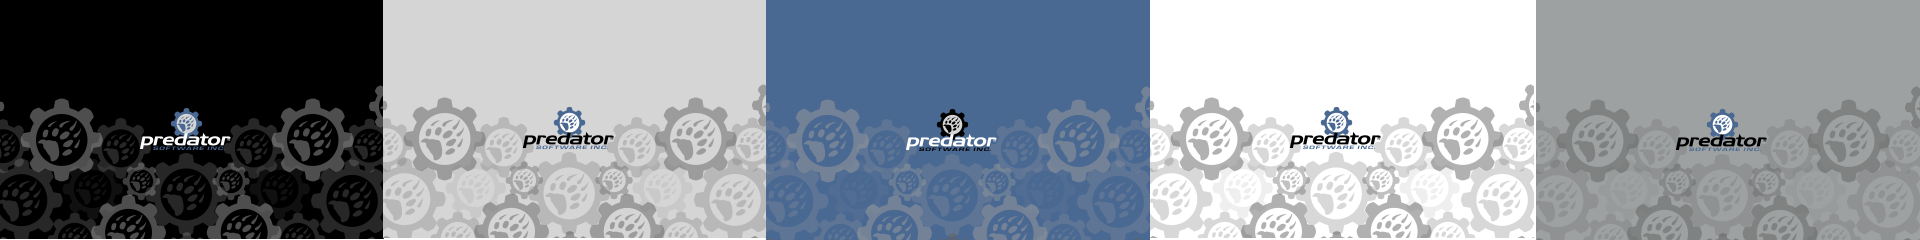 Predator Software Desktop Wallpaper